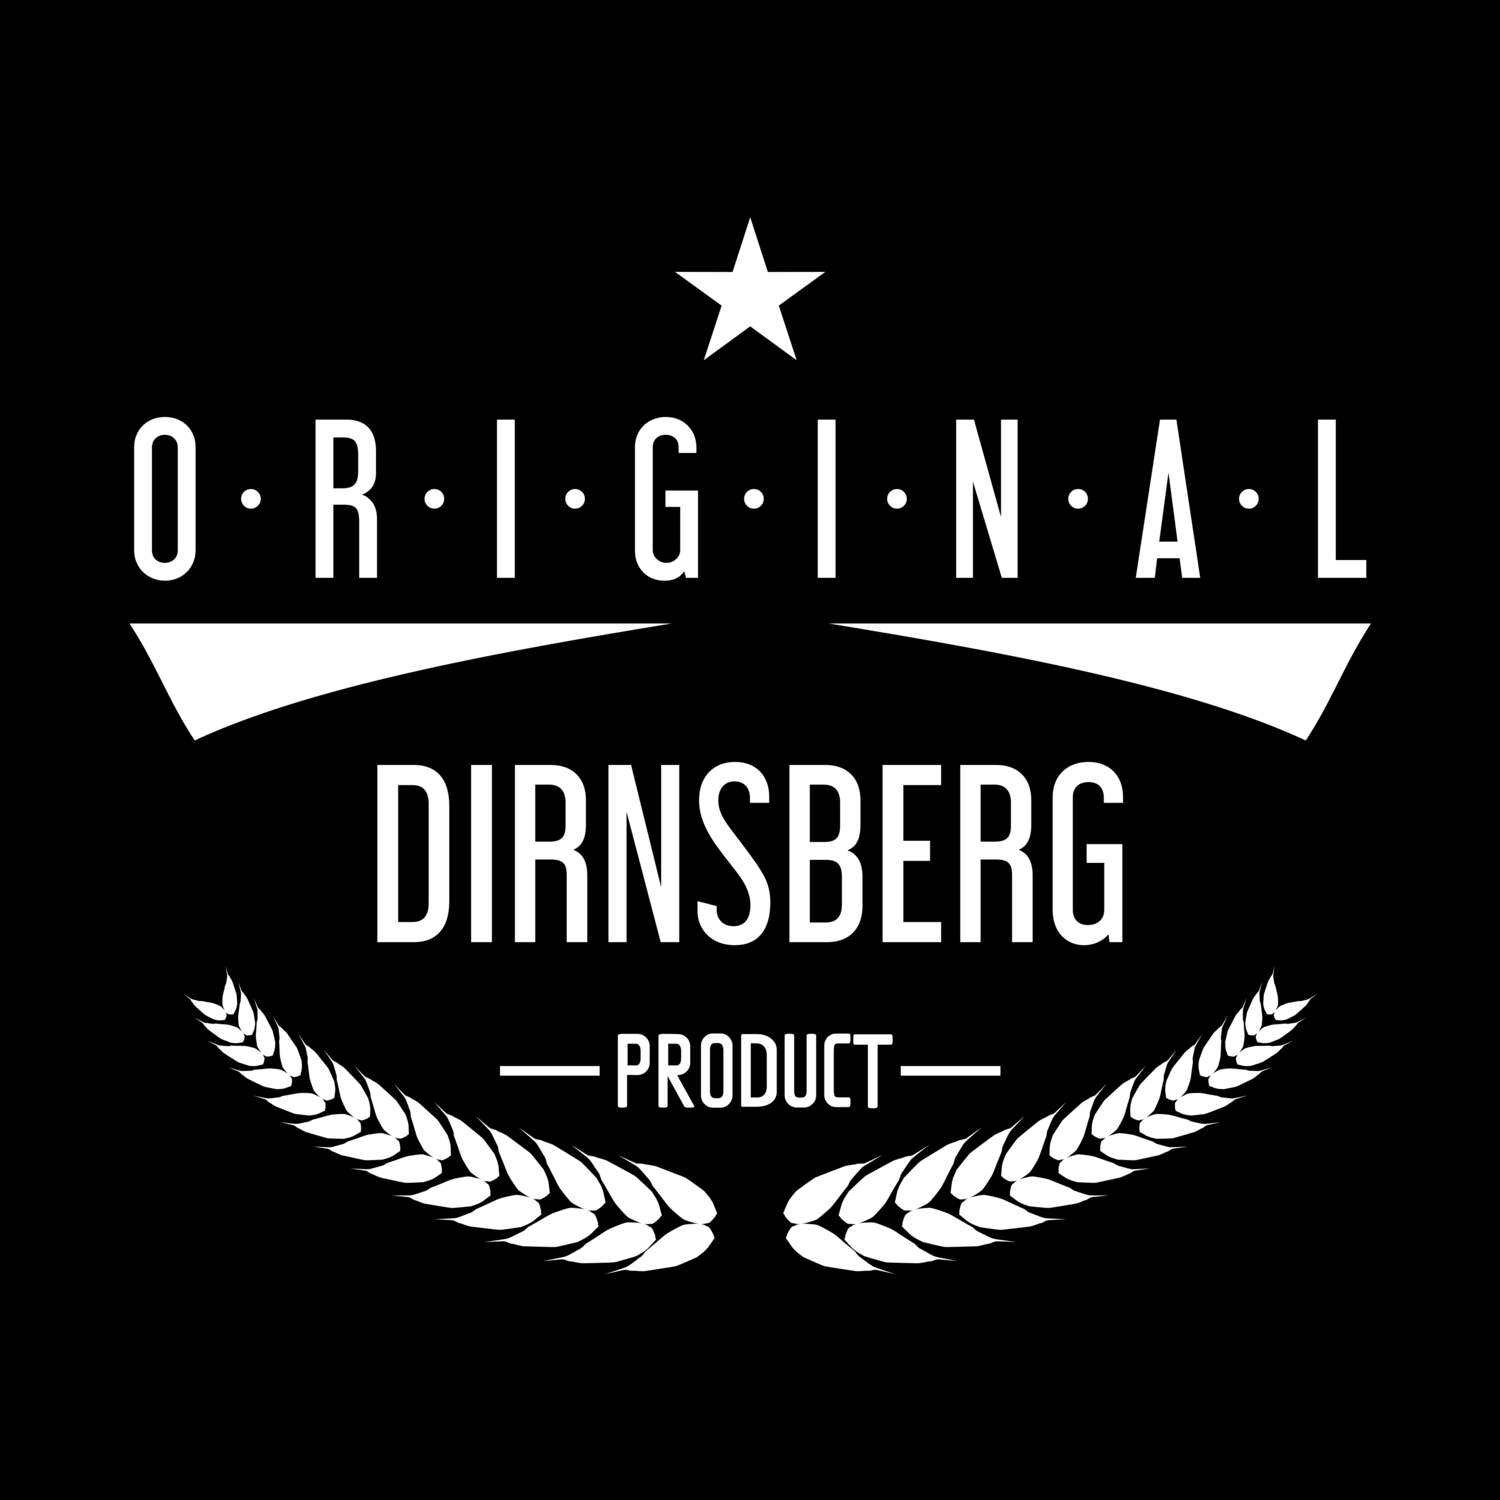 Dirnsberg T-Shirt »Original Product«